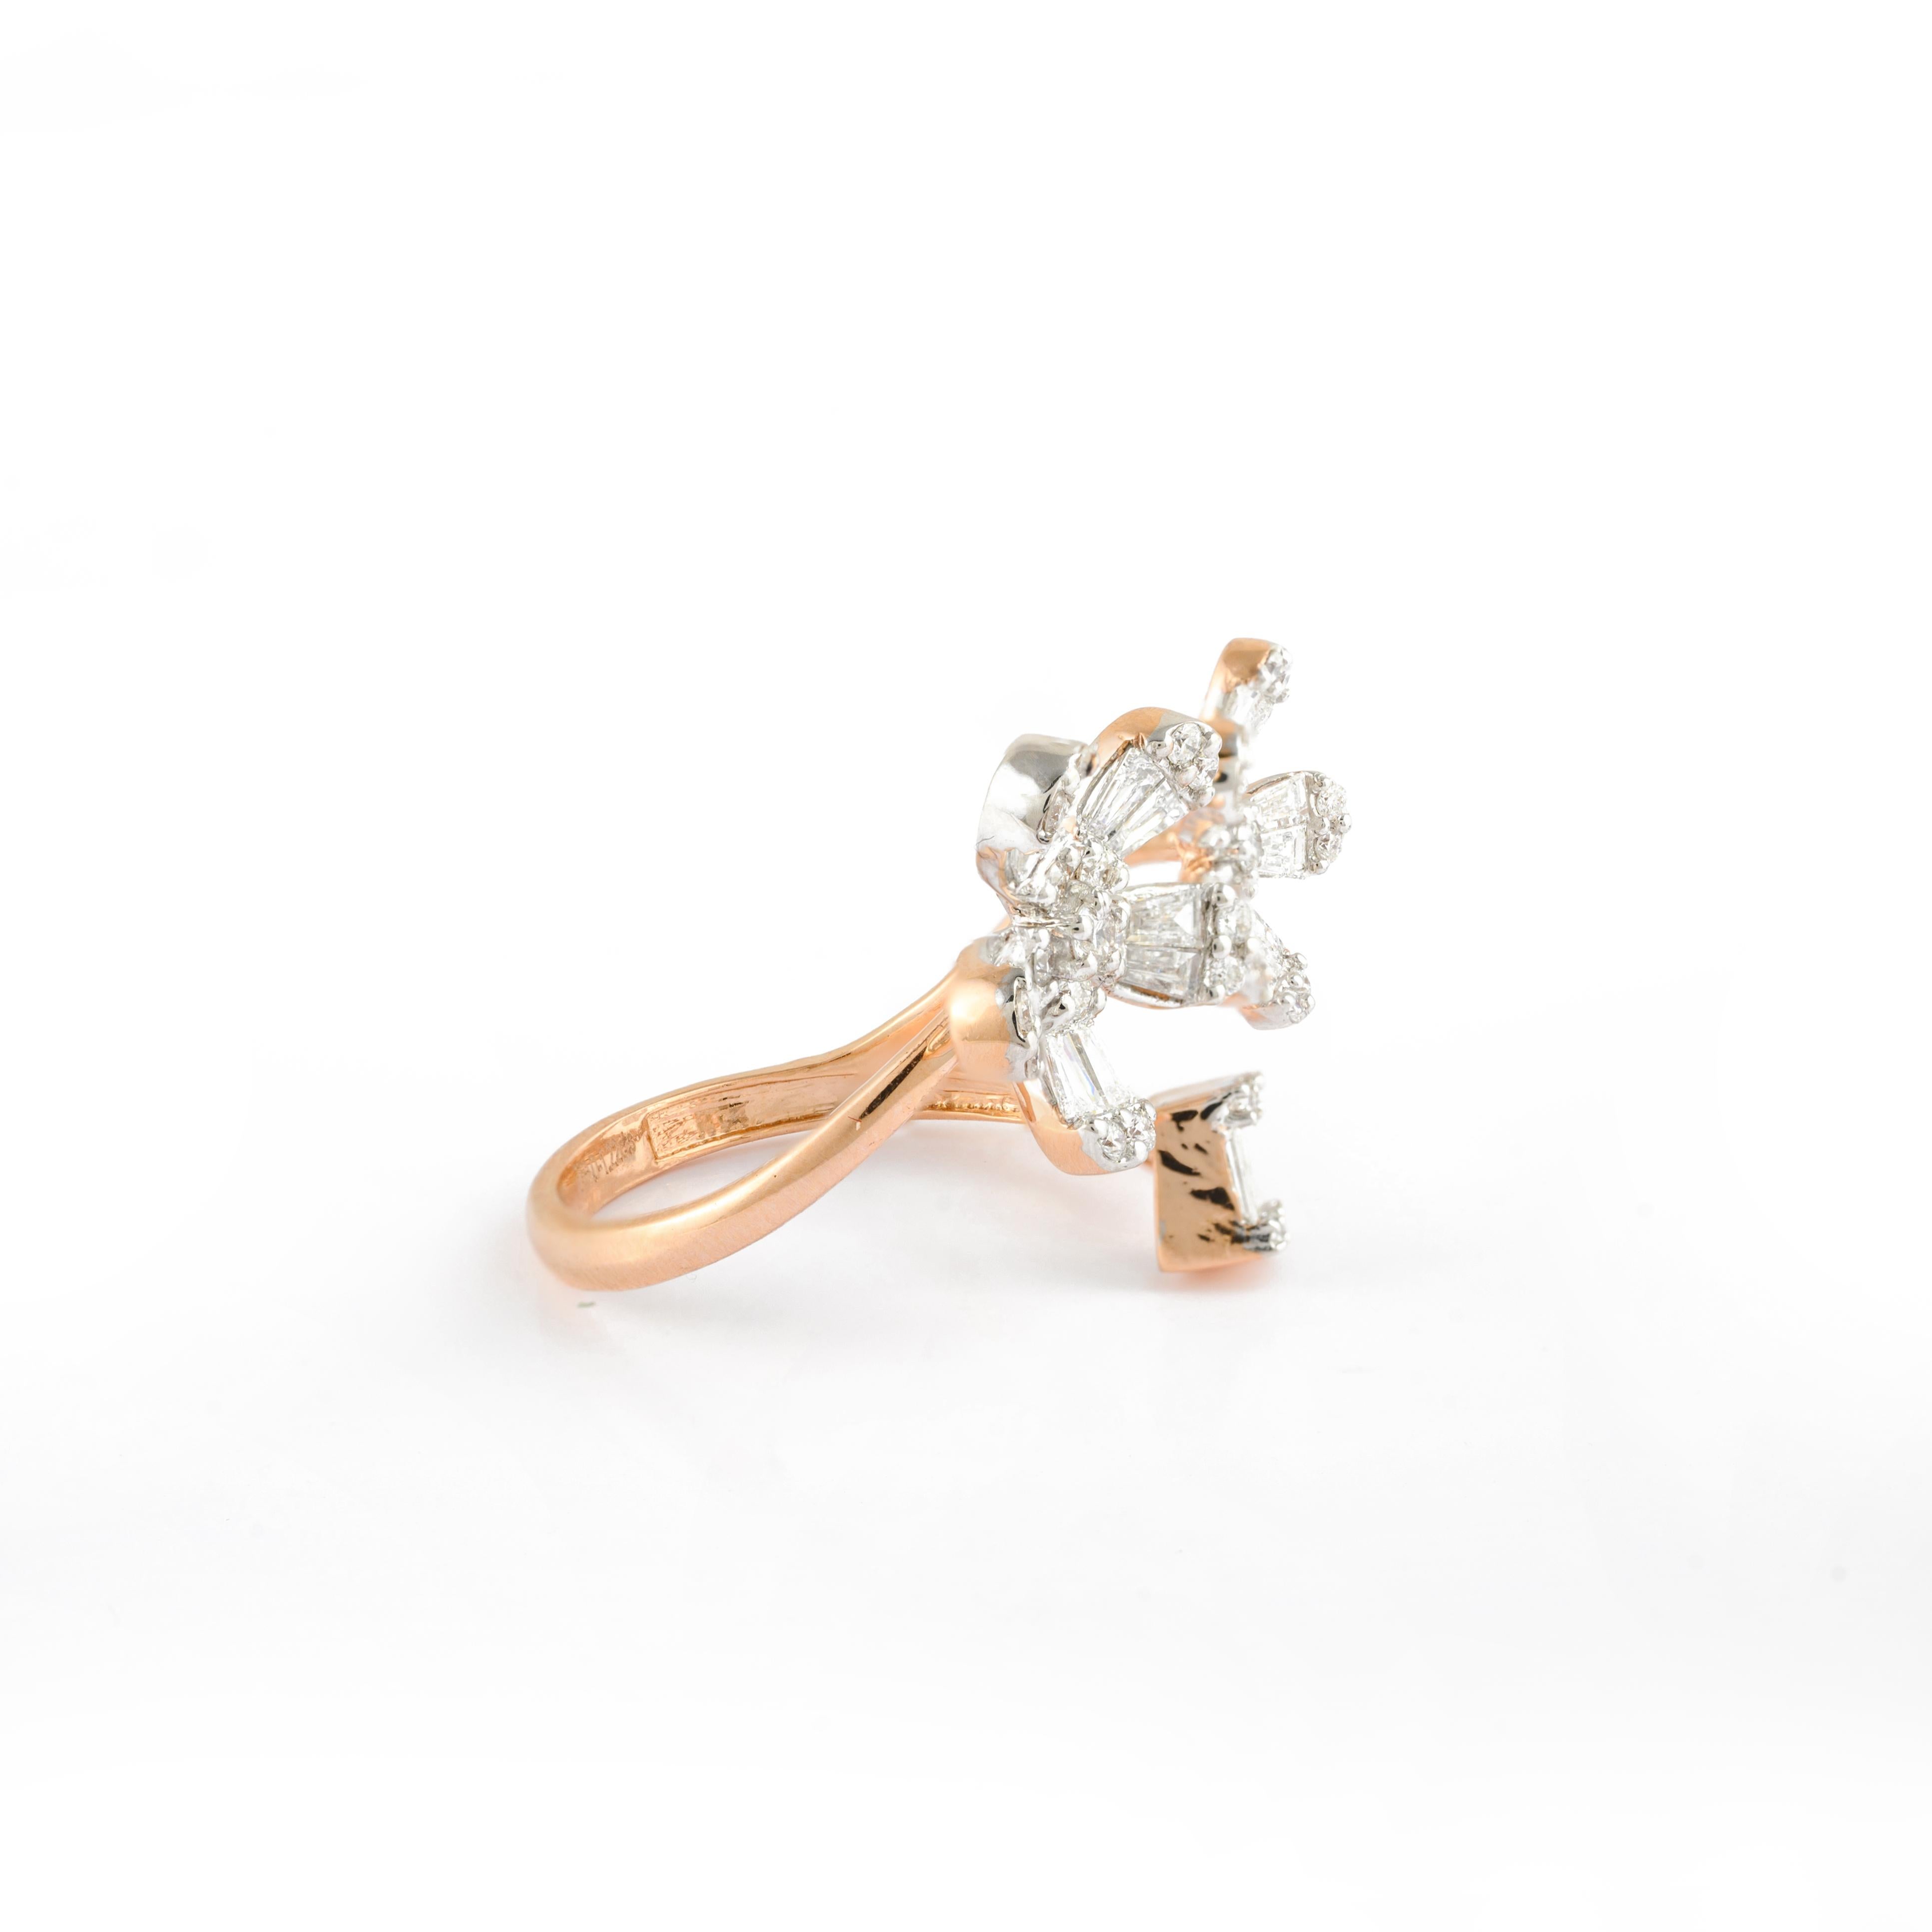 For Sale:  18kt Solid Rose Gold Designer Women's Stunning Diamond Floral Ring 6